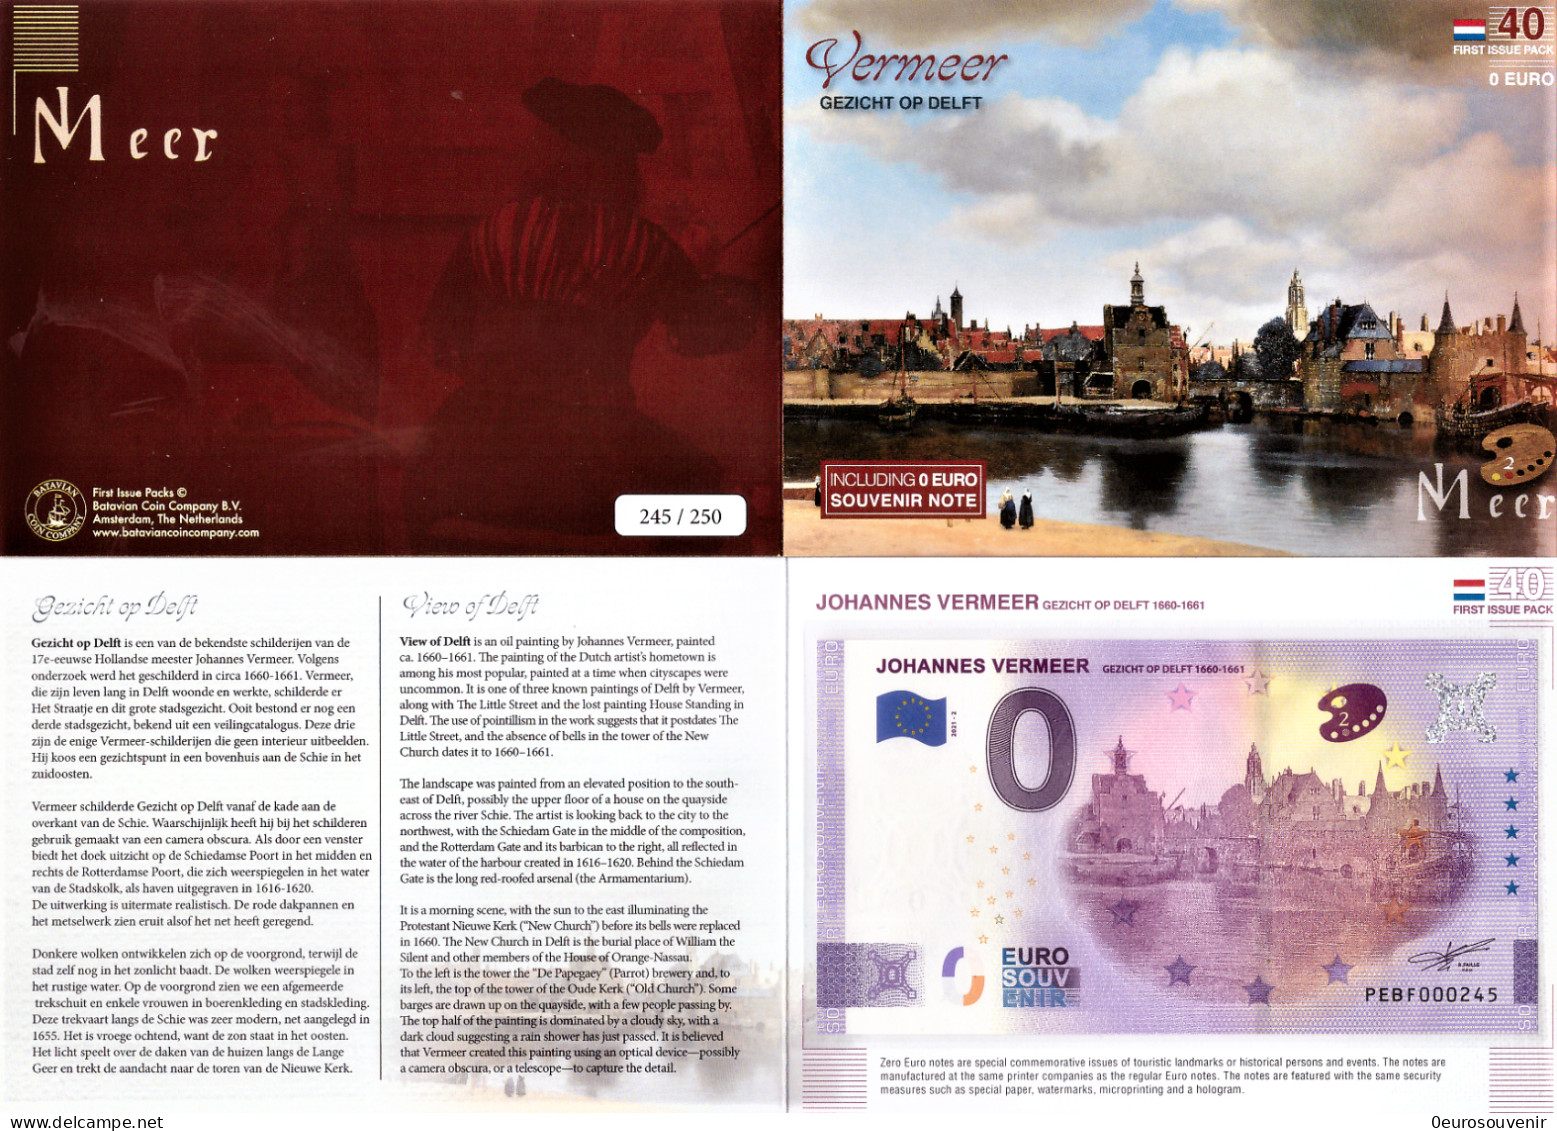 0-Euro PEBF 2021-2 JOHANNES VERMEER - GEZICHT OP DELFT 1660-1661 First Issue Pack No. Nur Bis #250 ! - Essais Privés / Non-officiels